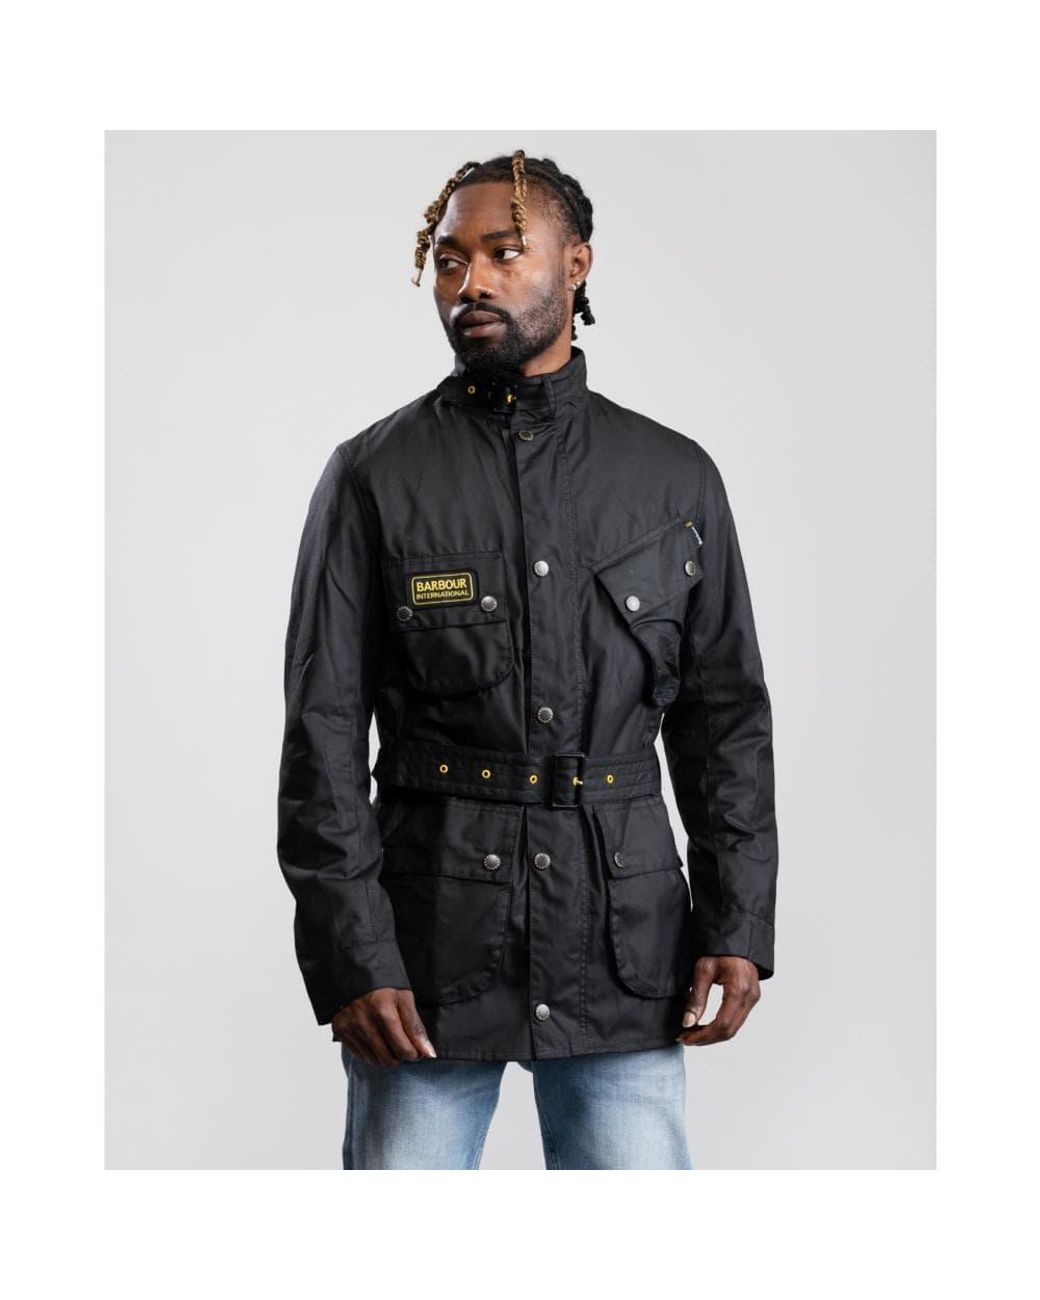 Barbour Cotton Slim International Wax Jacket in Black/Black (Black) for Men  - Save 59% | Lyst